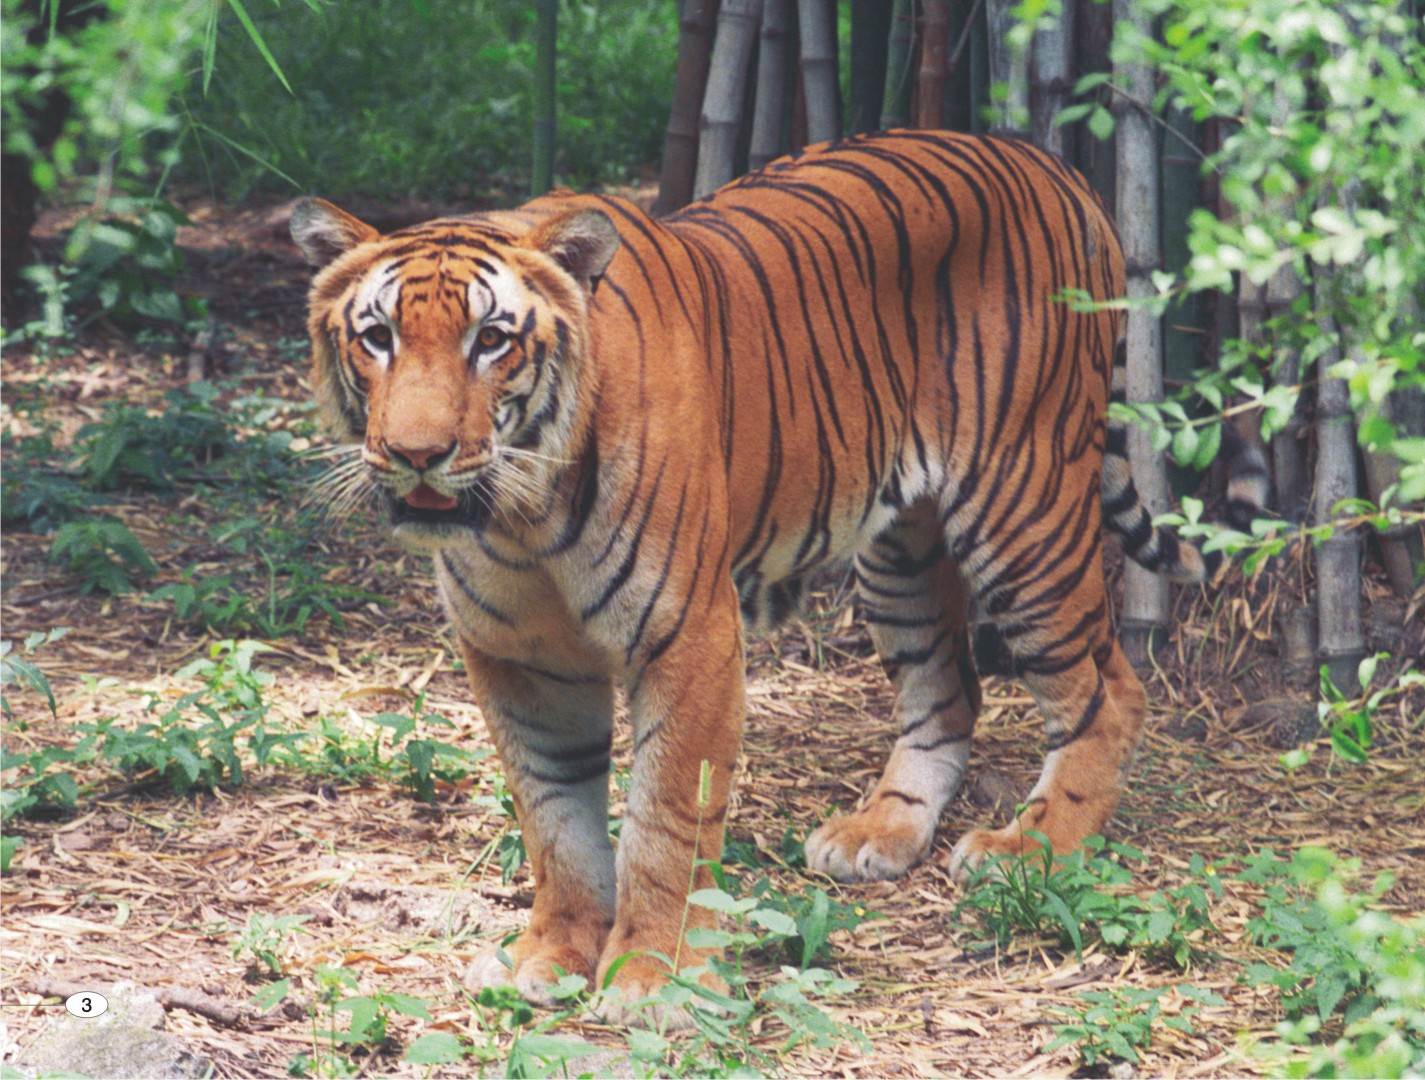 Tiger reserve Amrabad Telangana Uranu=ium Survey Drilling Atomic Energy - The Federal